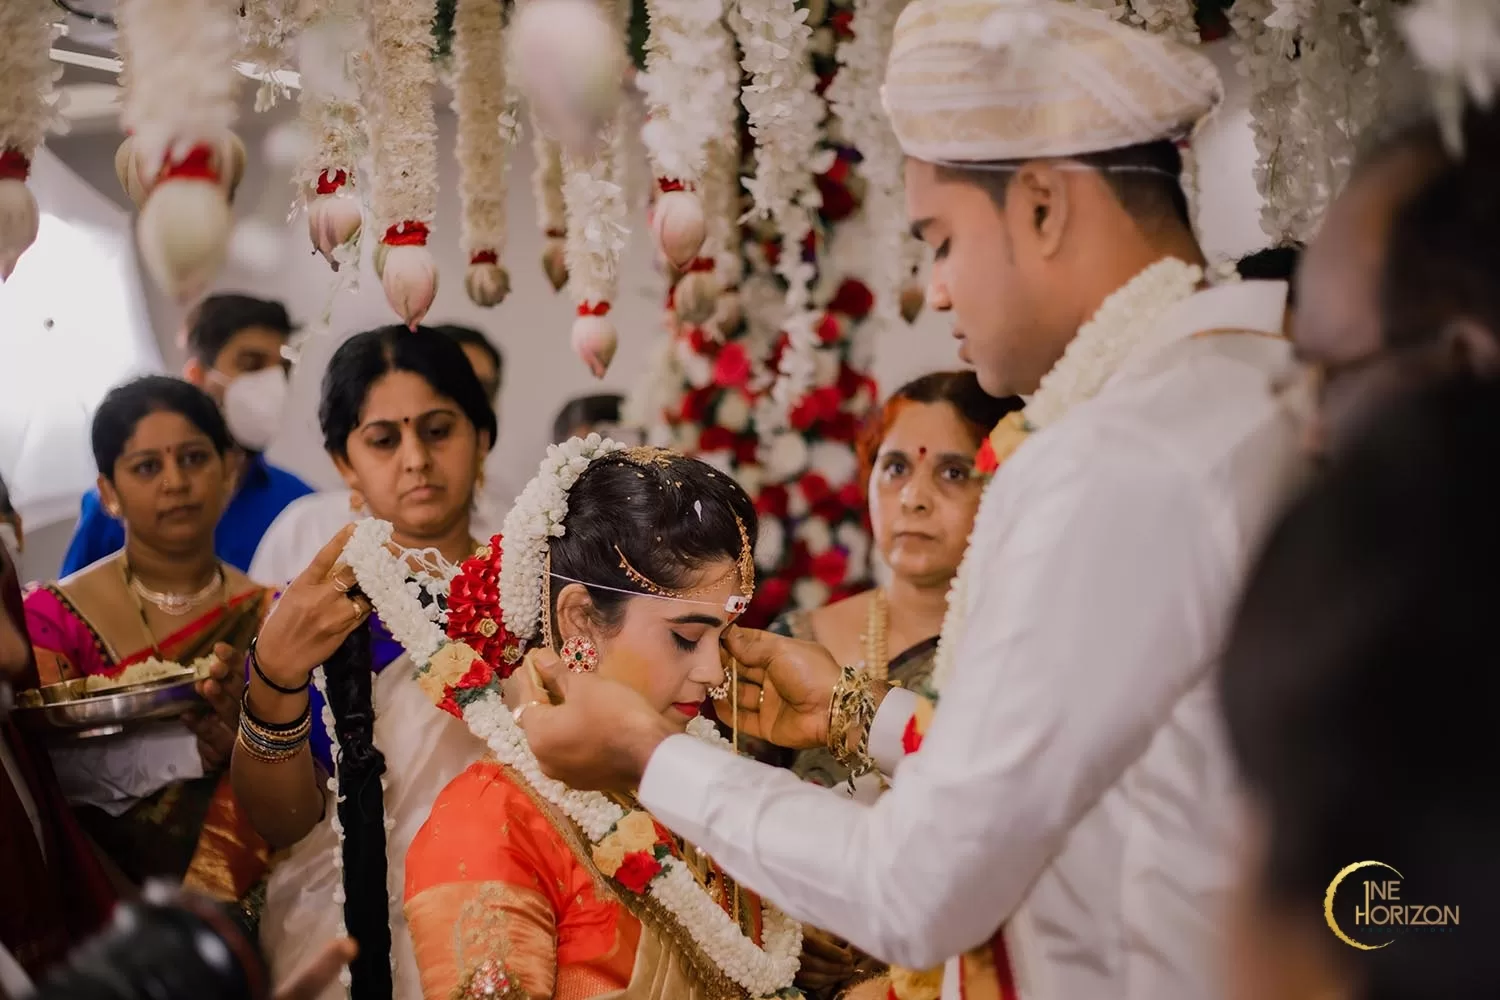 Indian Bridal Poses For Aesthetic Photos - Indian(Hindu) Photoshoot Bridal  Poses